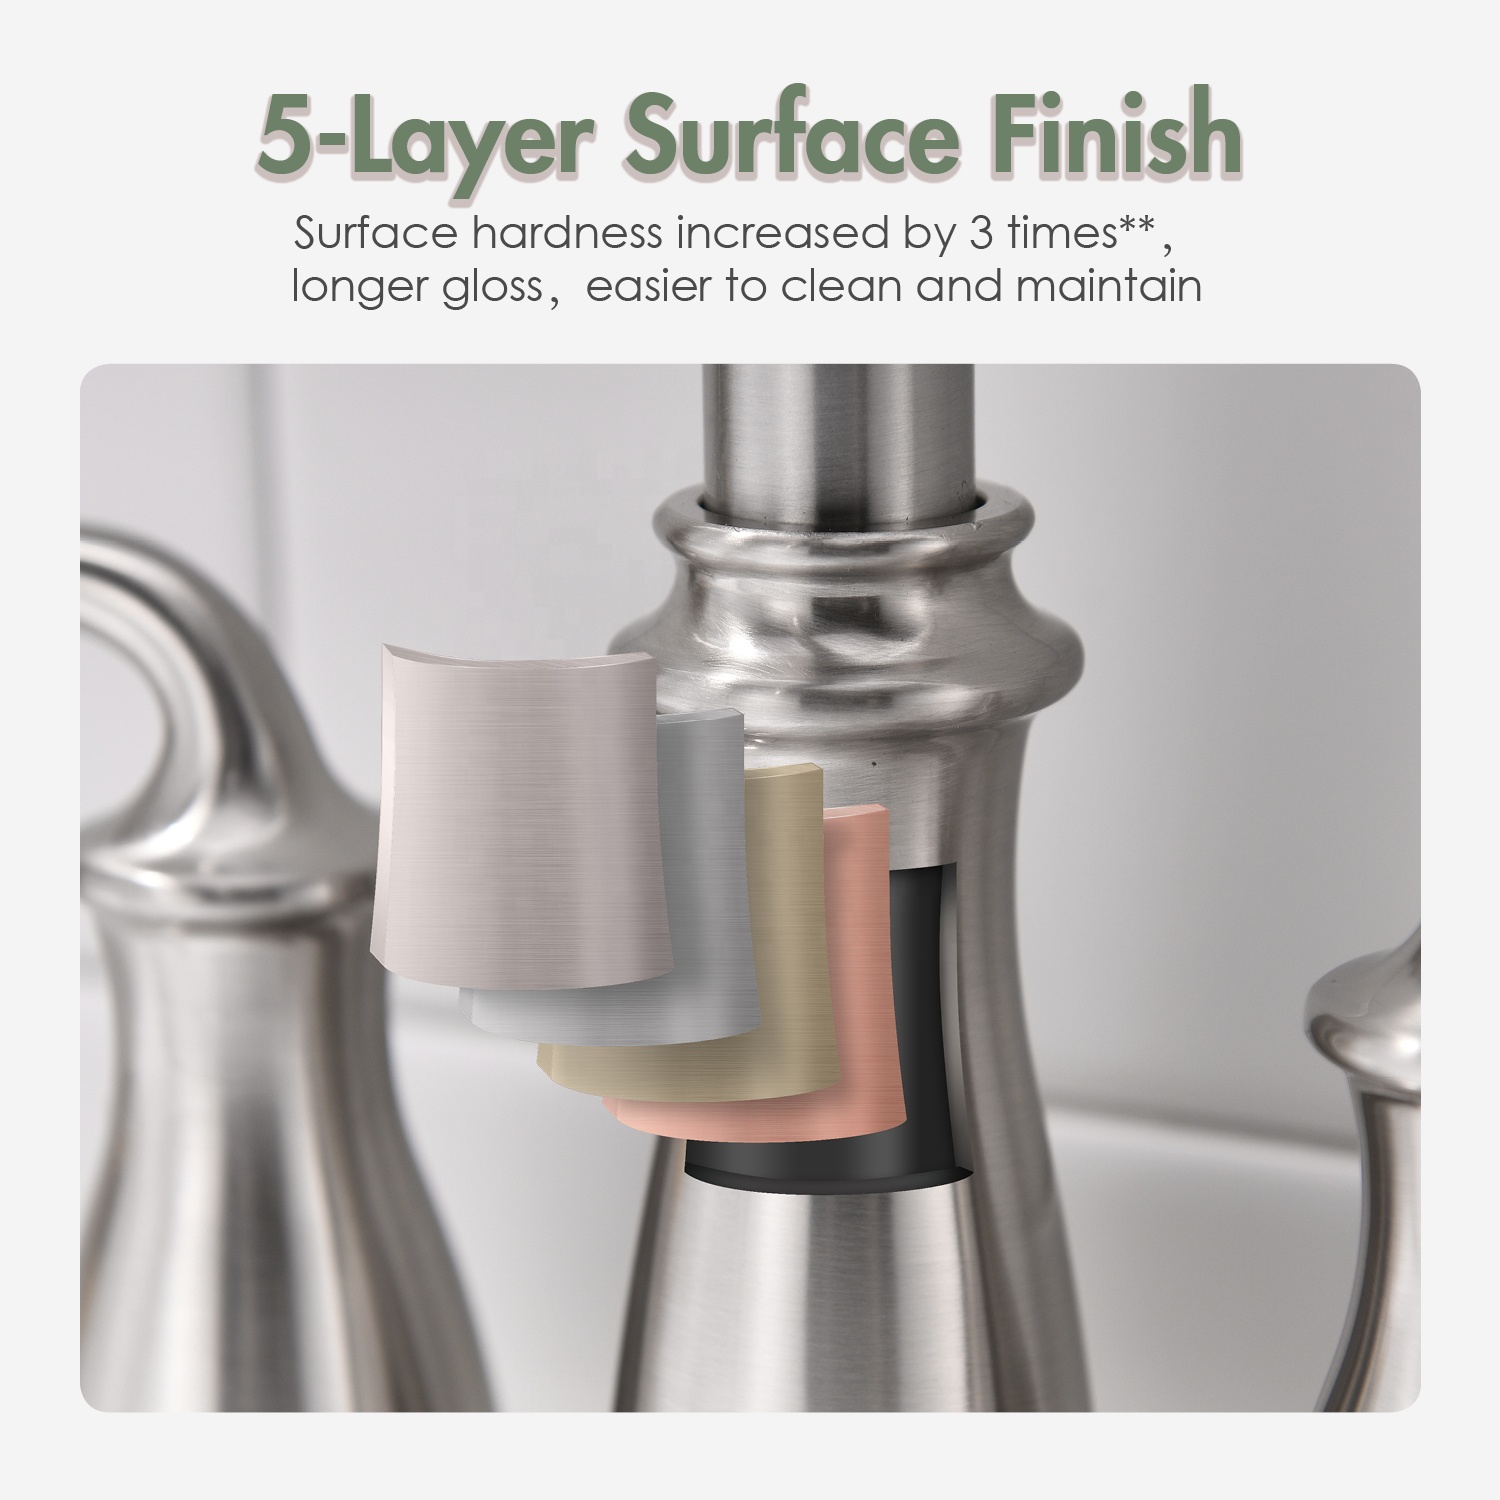 Factory American Classic Water Mixer Faucets Dual Handle Tap UPC Bathroom Basin Faucet